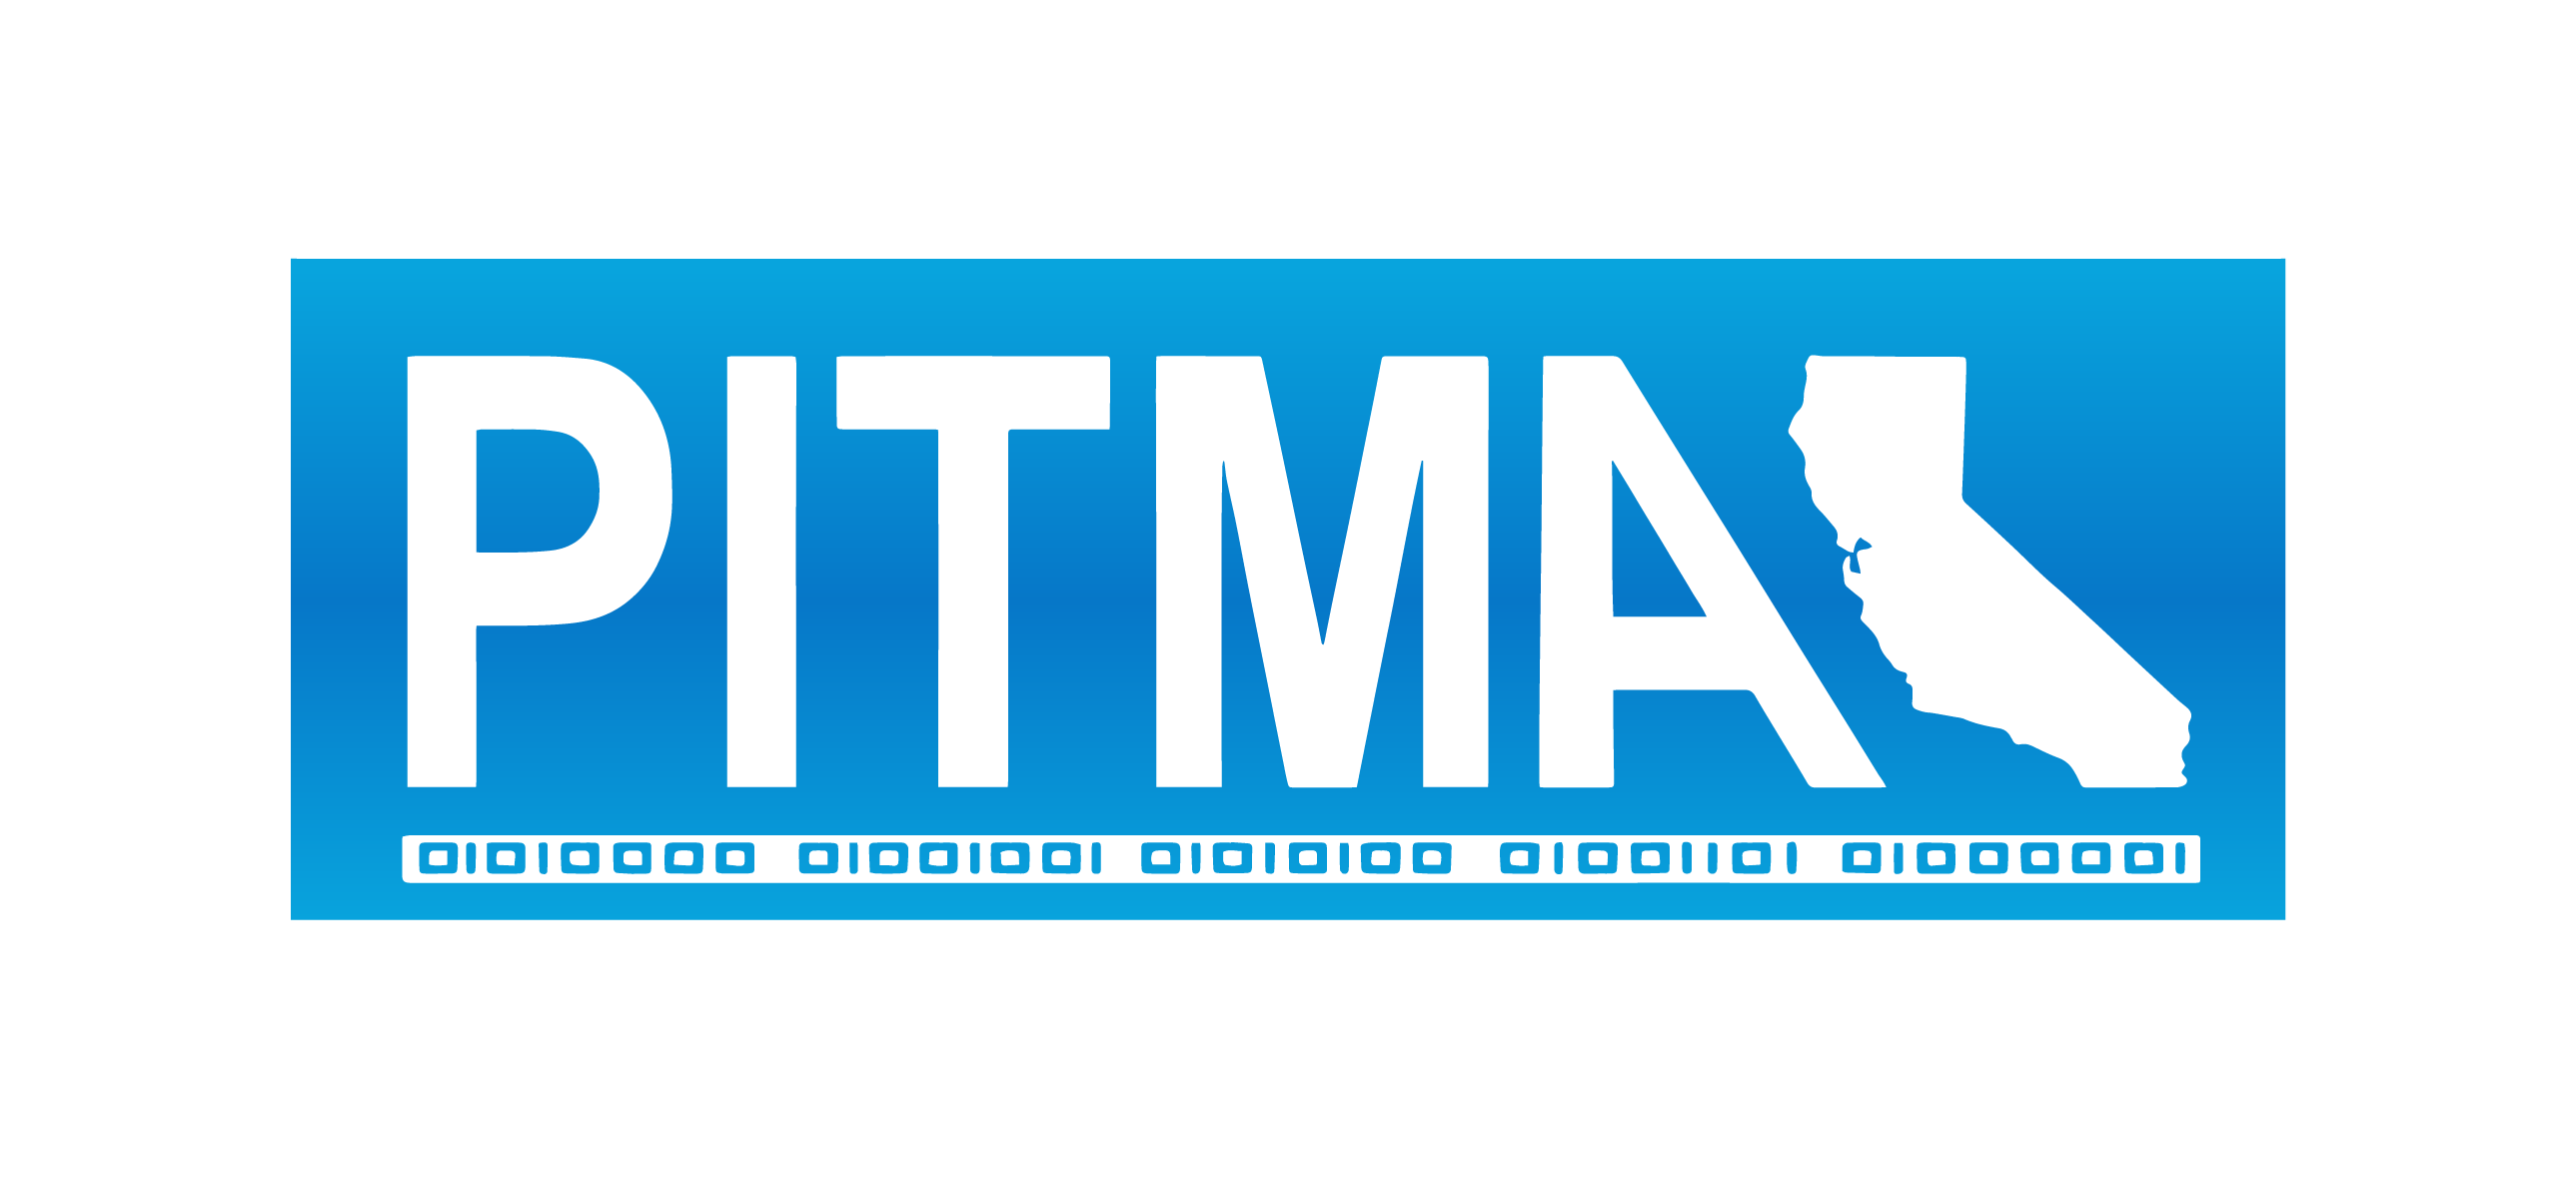 PITMA (Probation Information Technology Managers Association) logo. White writing on a light blue background